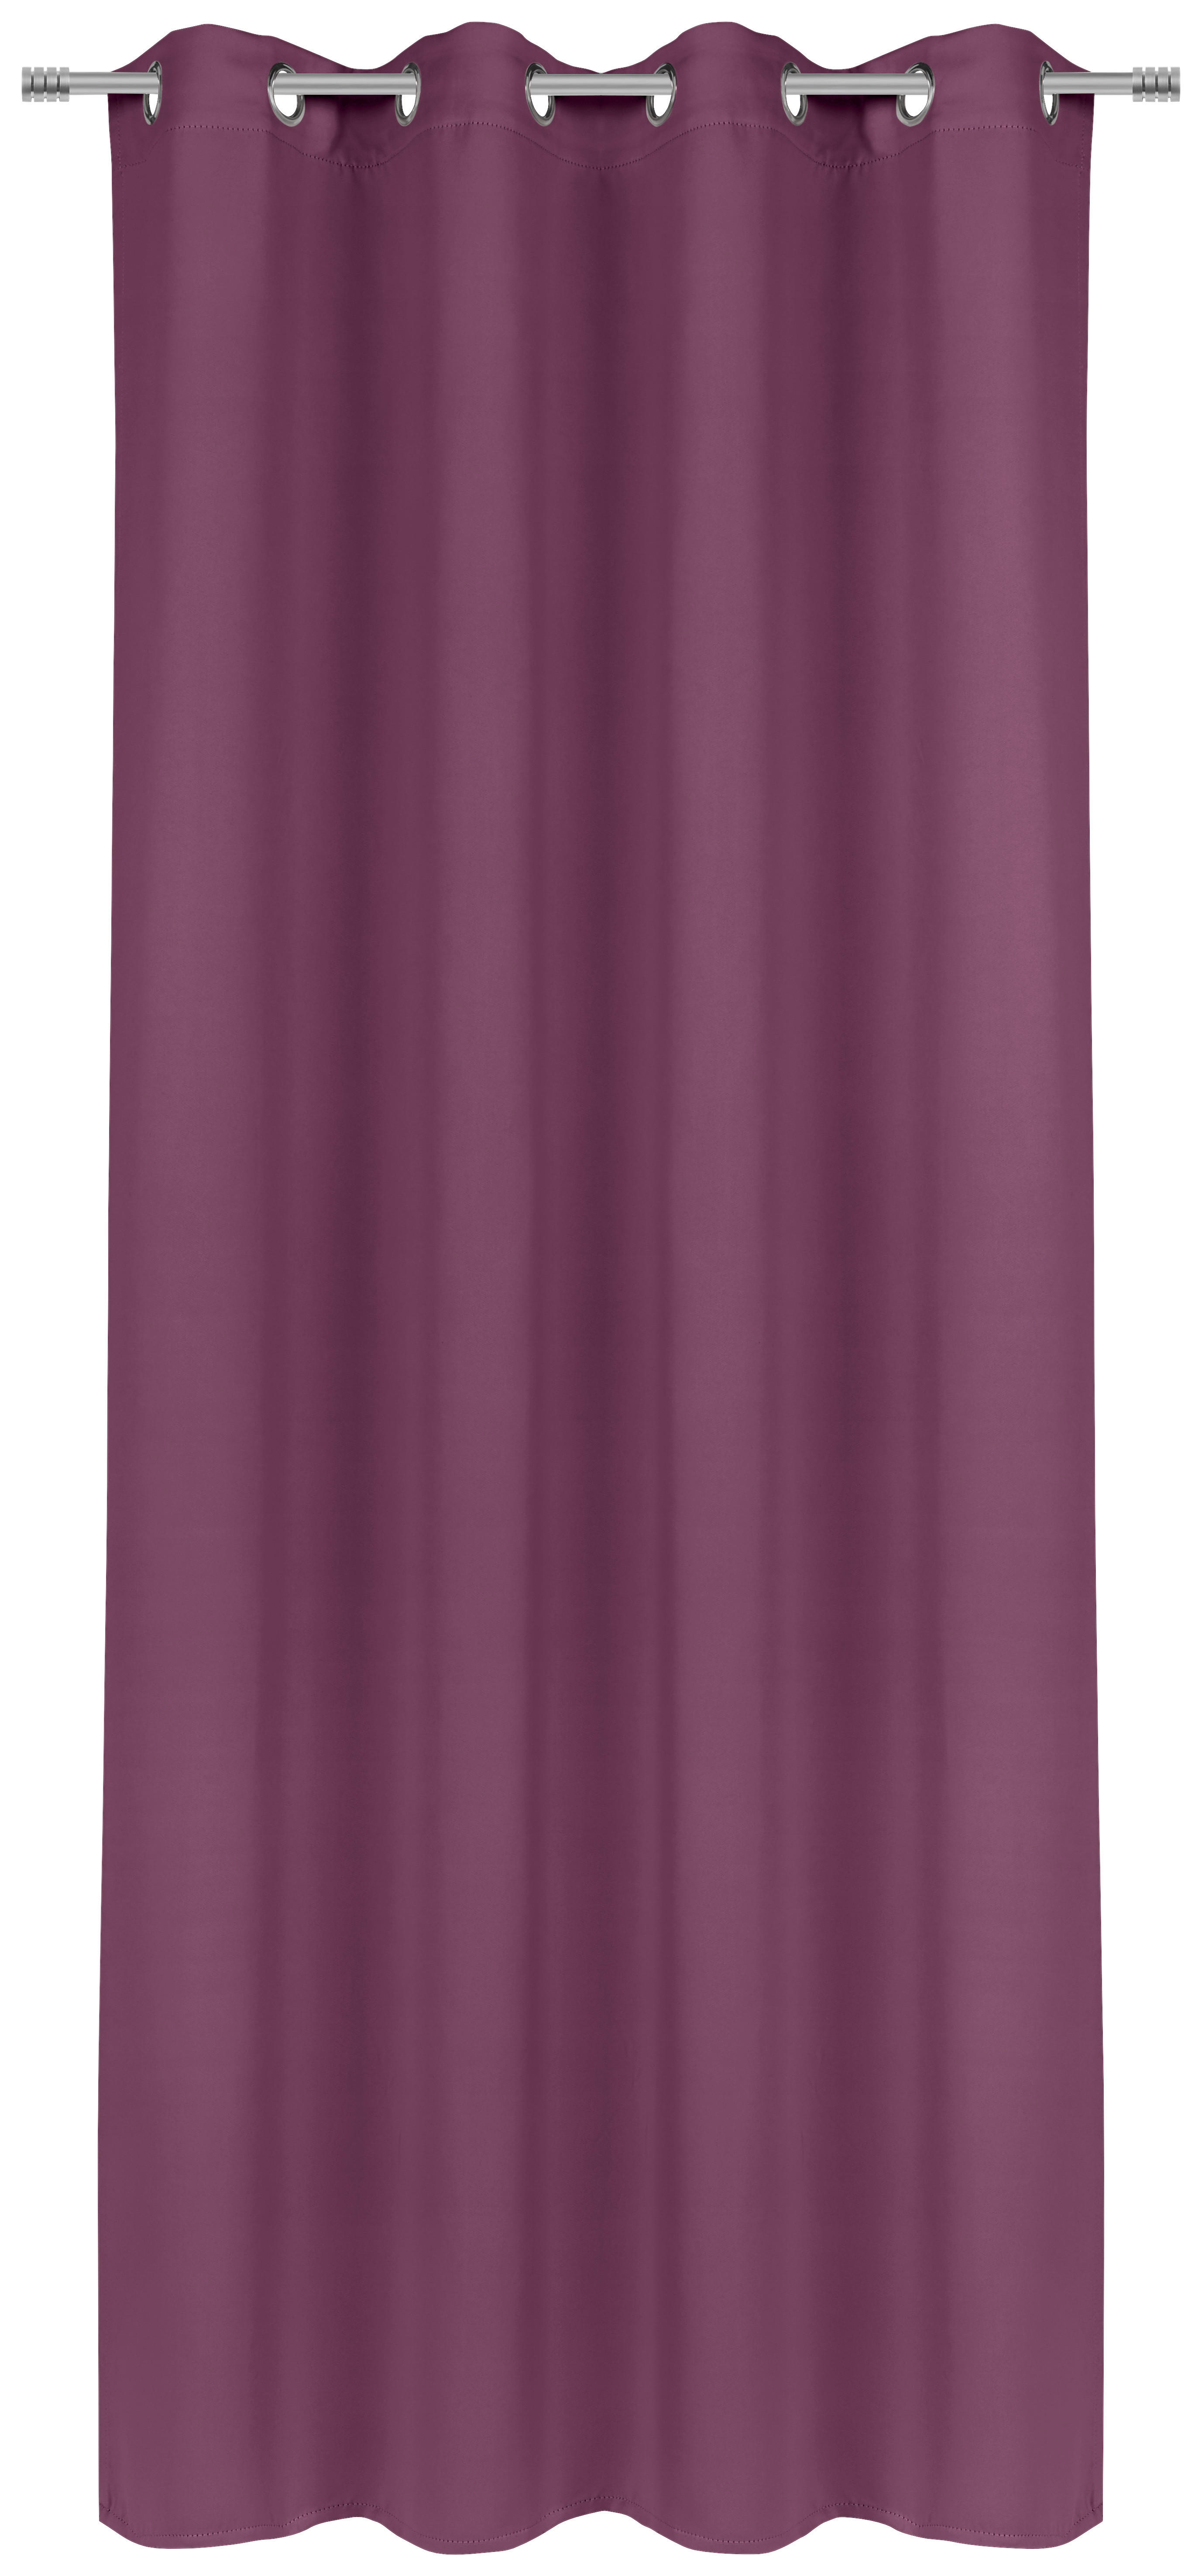 ÖSENSCHAL Verdunkelung 140/245 cm   - Beere, Basics, Textil (140/245cm) - Esposa